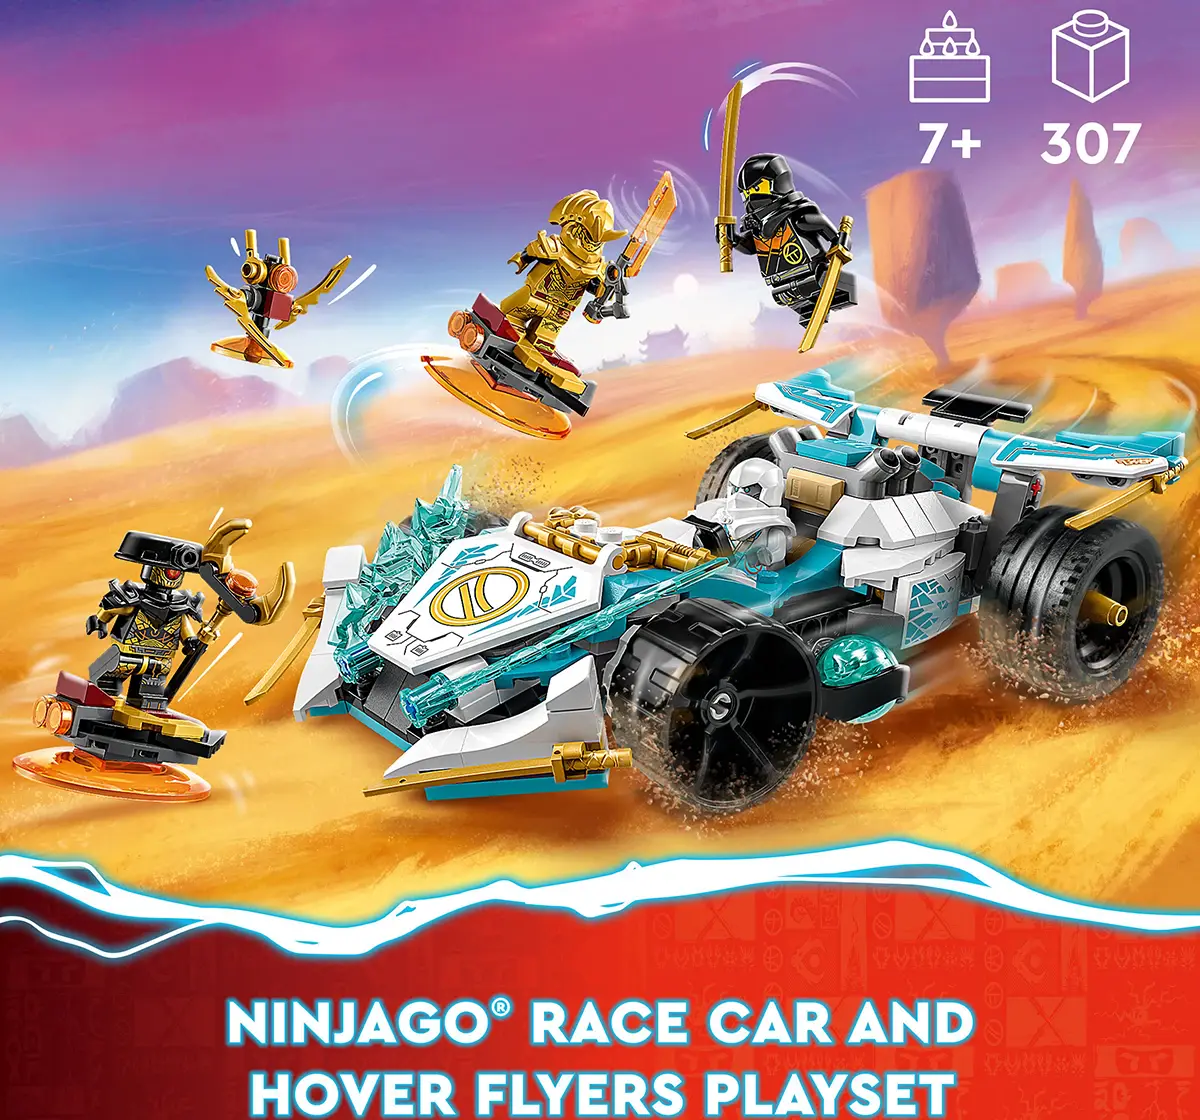 Lego Ninjago ZaneS Dragon Power Spinjitzu Race Car 71791 Building Toy Set (307 Pieces), 7Y+